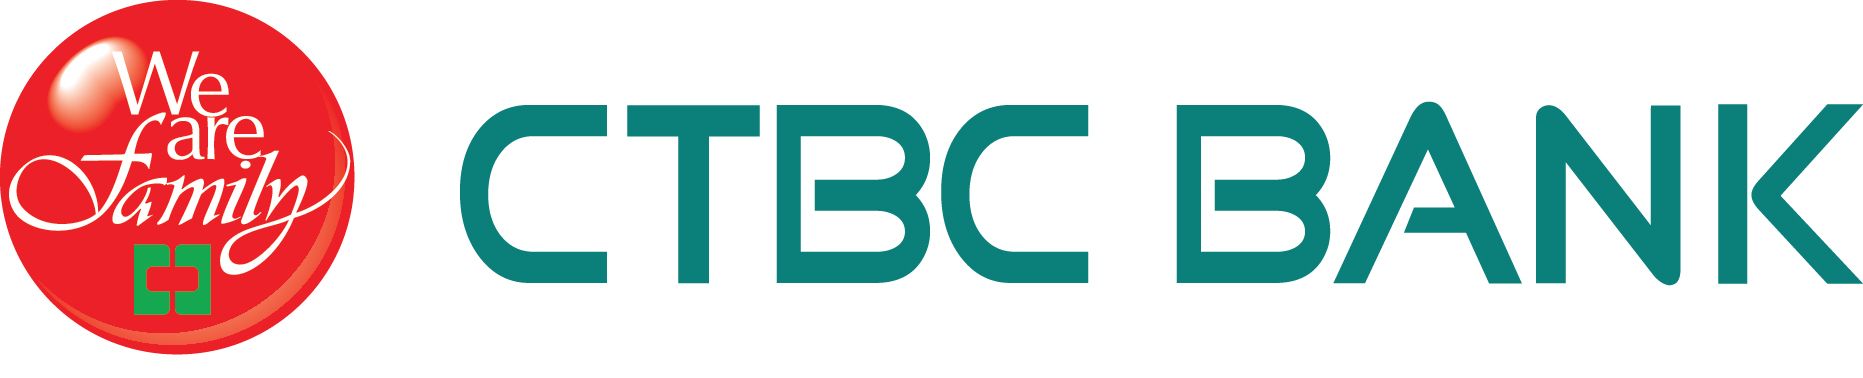 CTBC Bank Report Fin